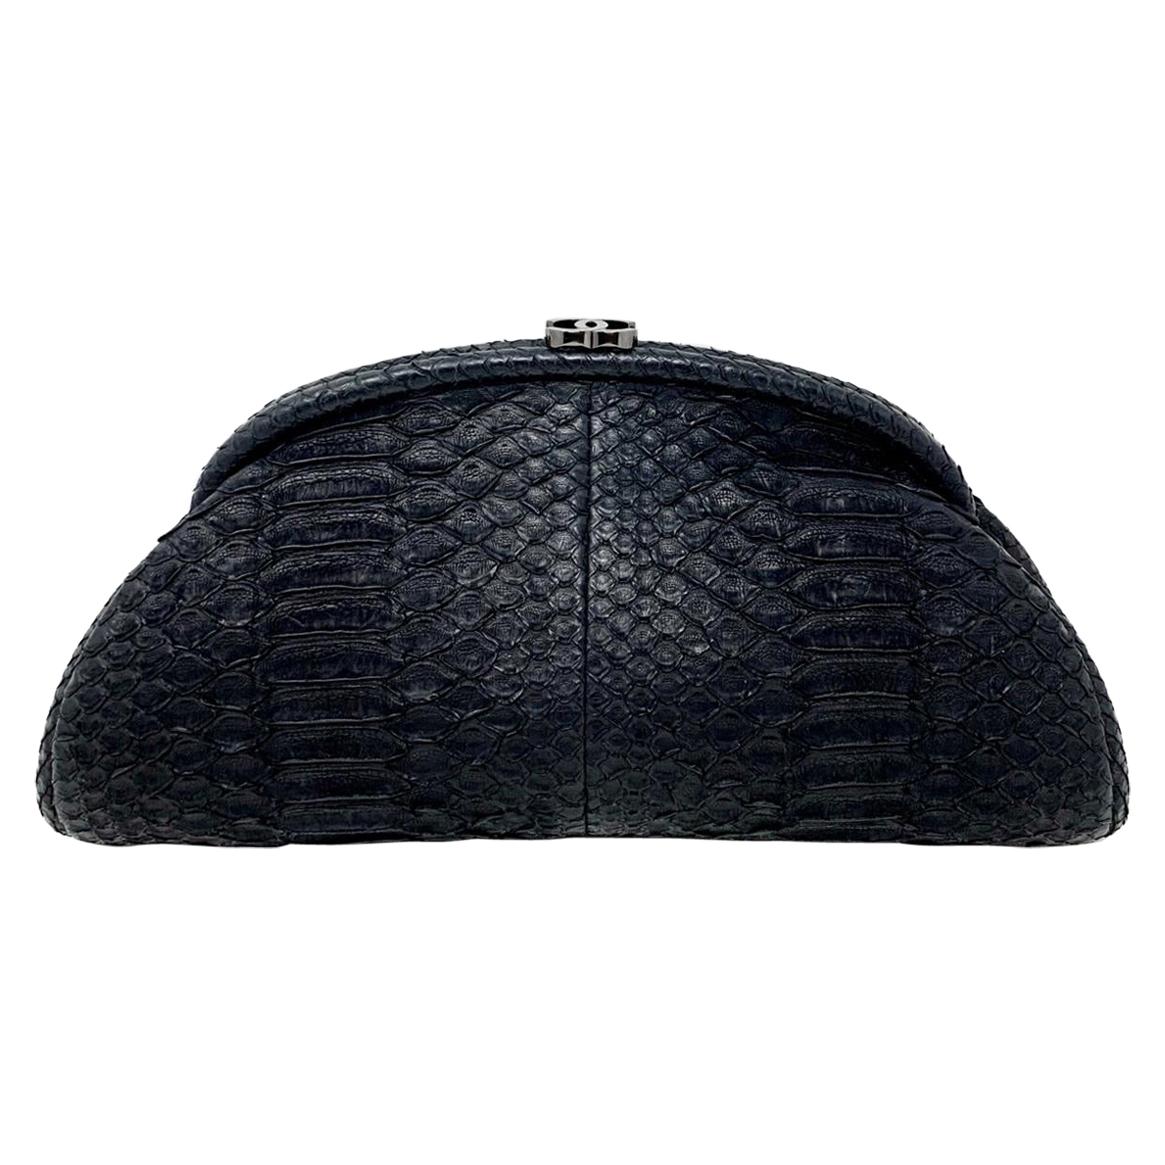 Chanel Black Python Leather Timeless Clutch, 2011